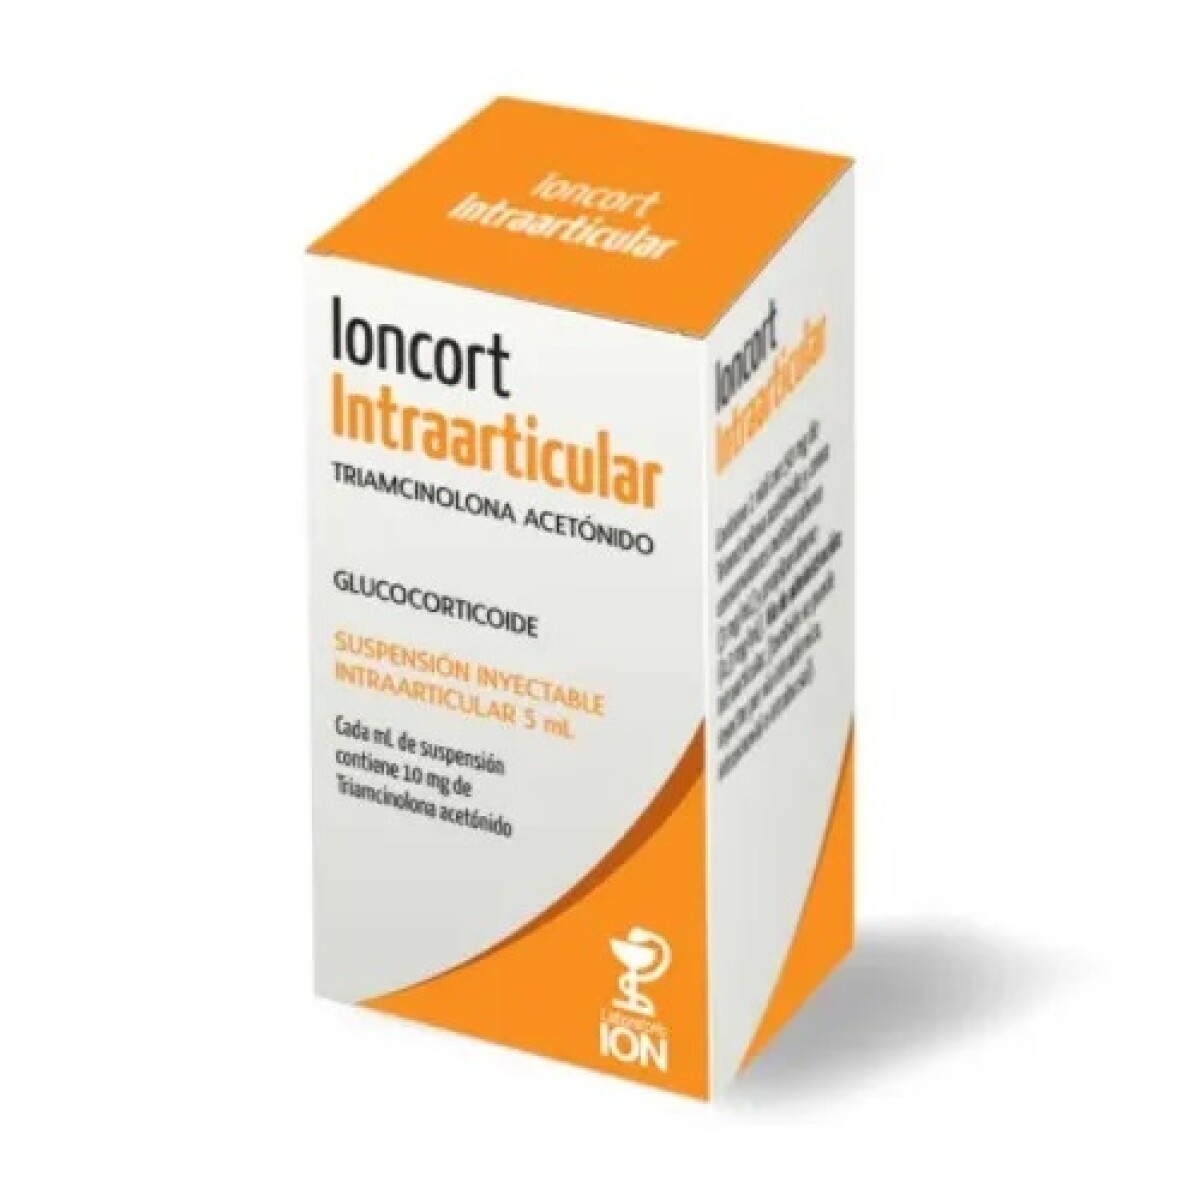 Ioncort Intraarticular Inyectable 5 Ml. 